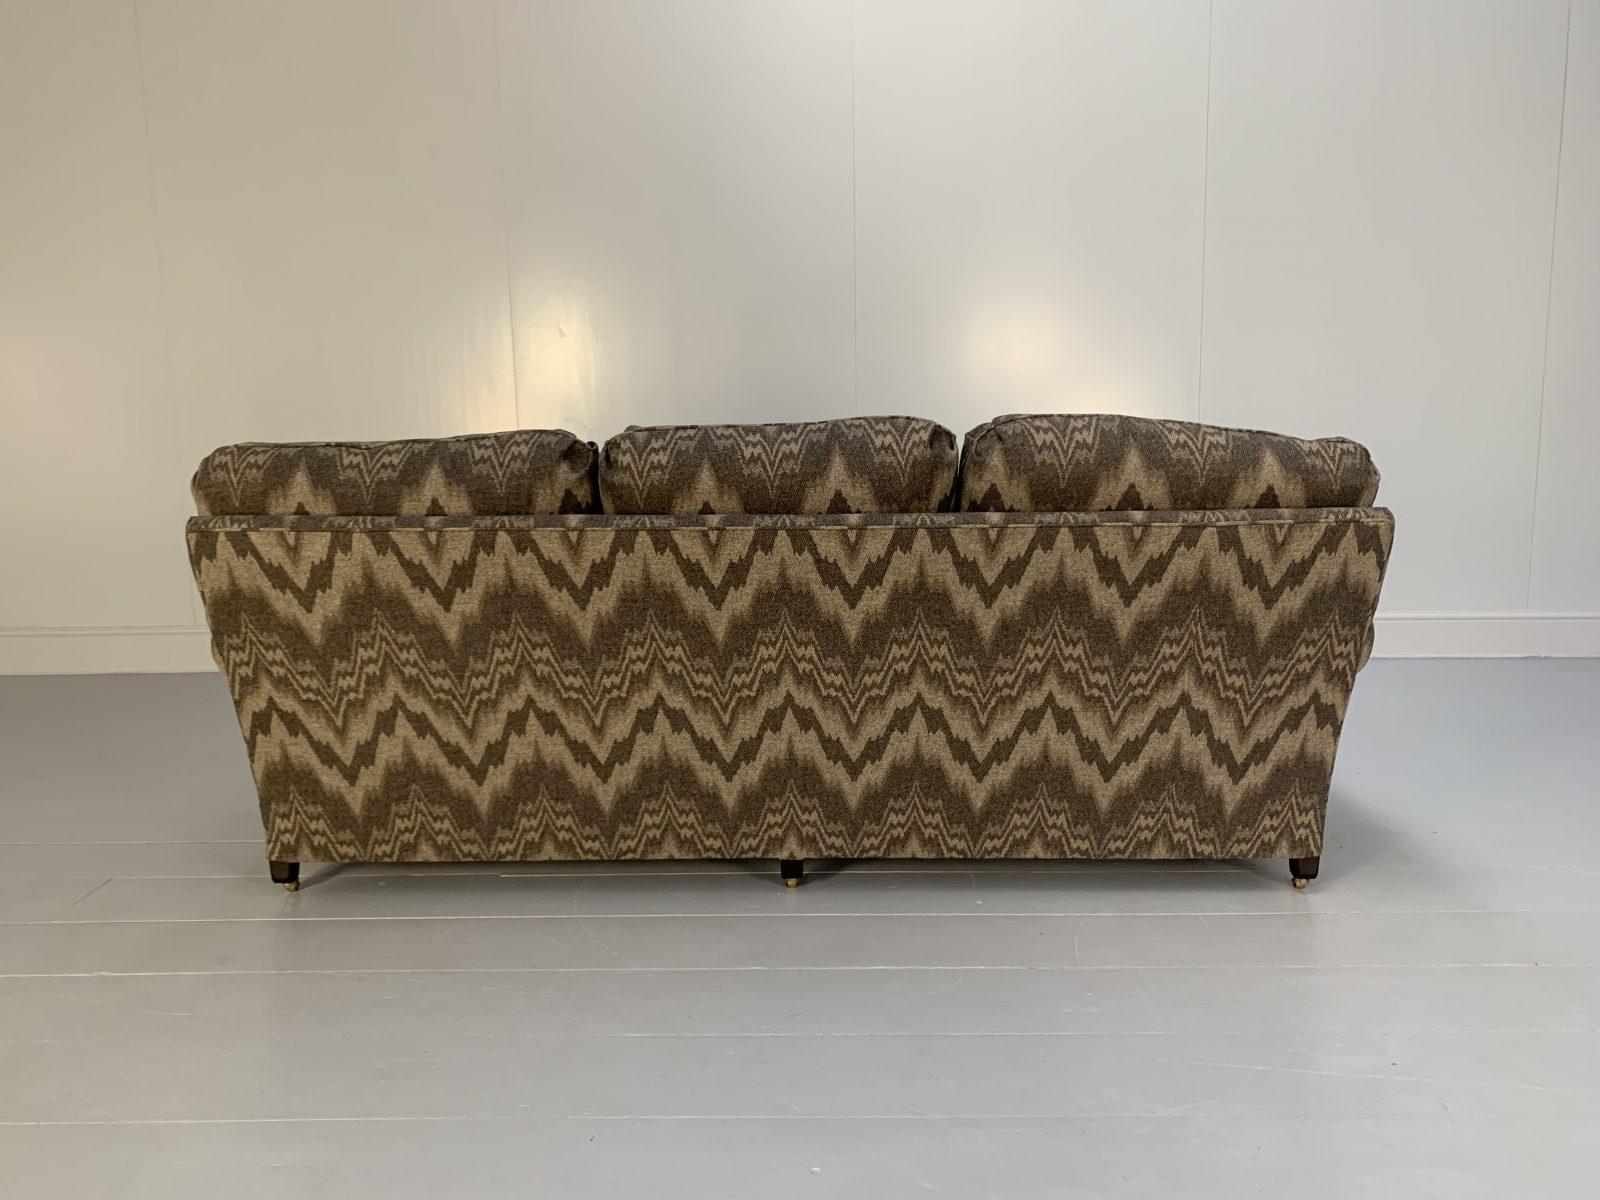 Contemporary George Smith “Signature” Sofa – Medium 3-Seat – In Zoffany “Malvern” Wool